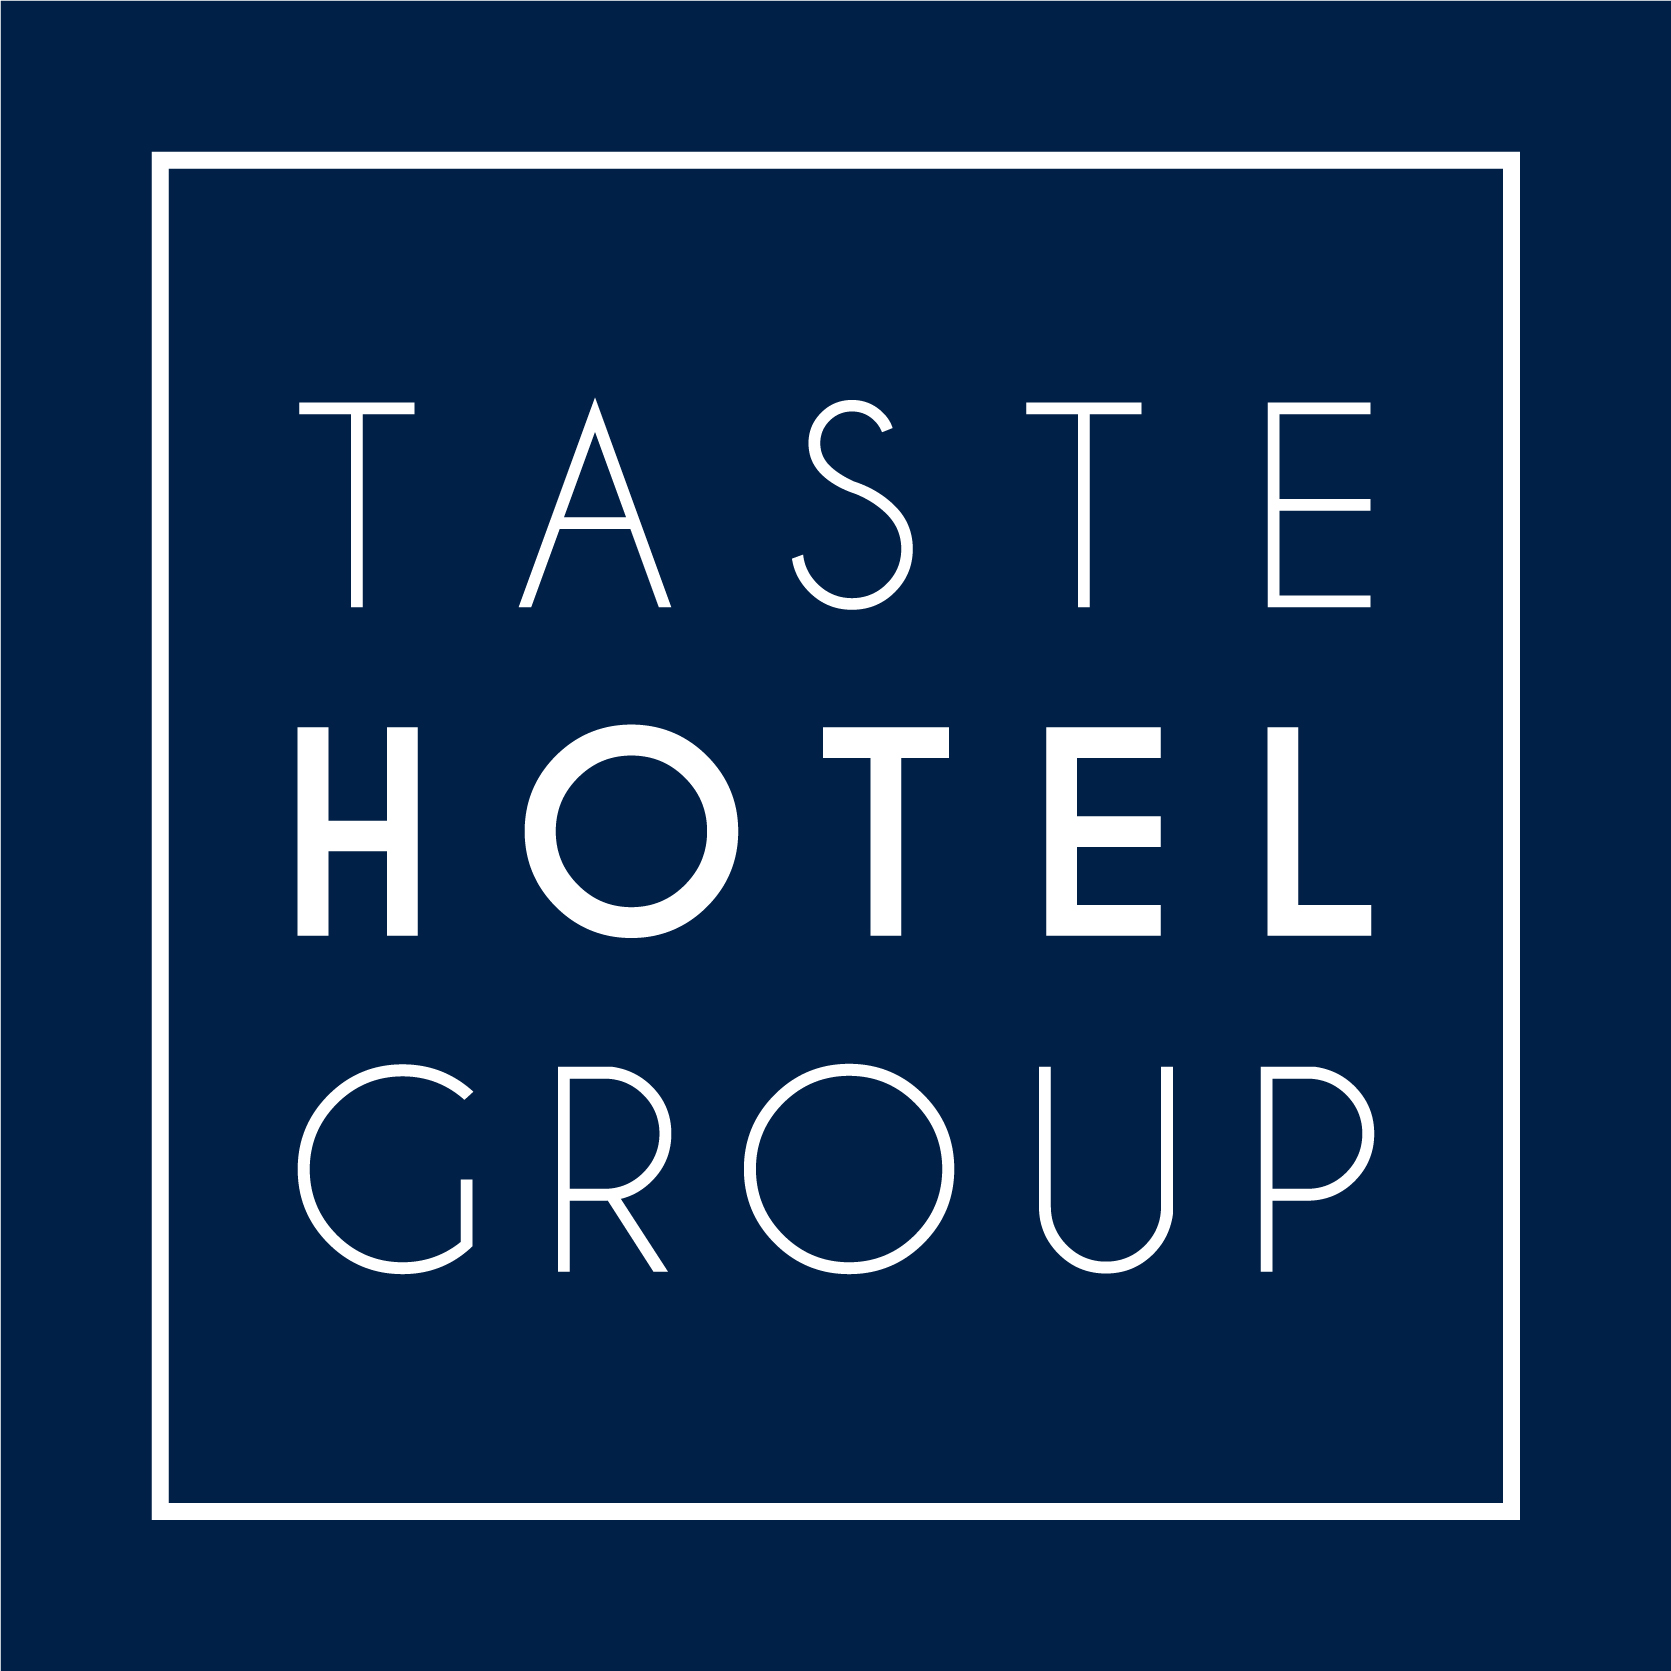 Taste Hotel Group - Taste is our Identity